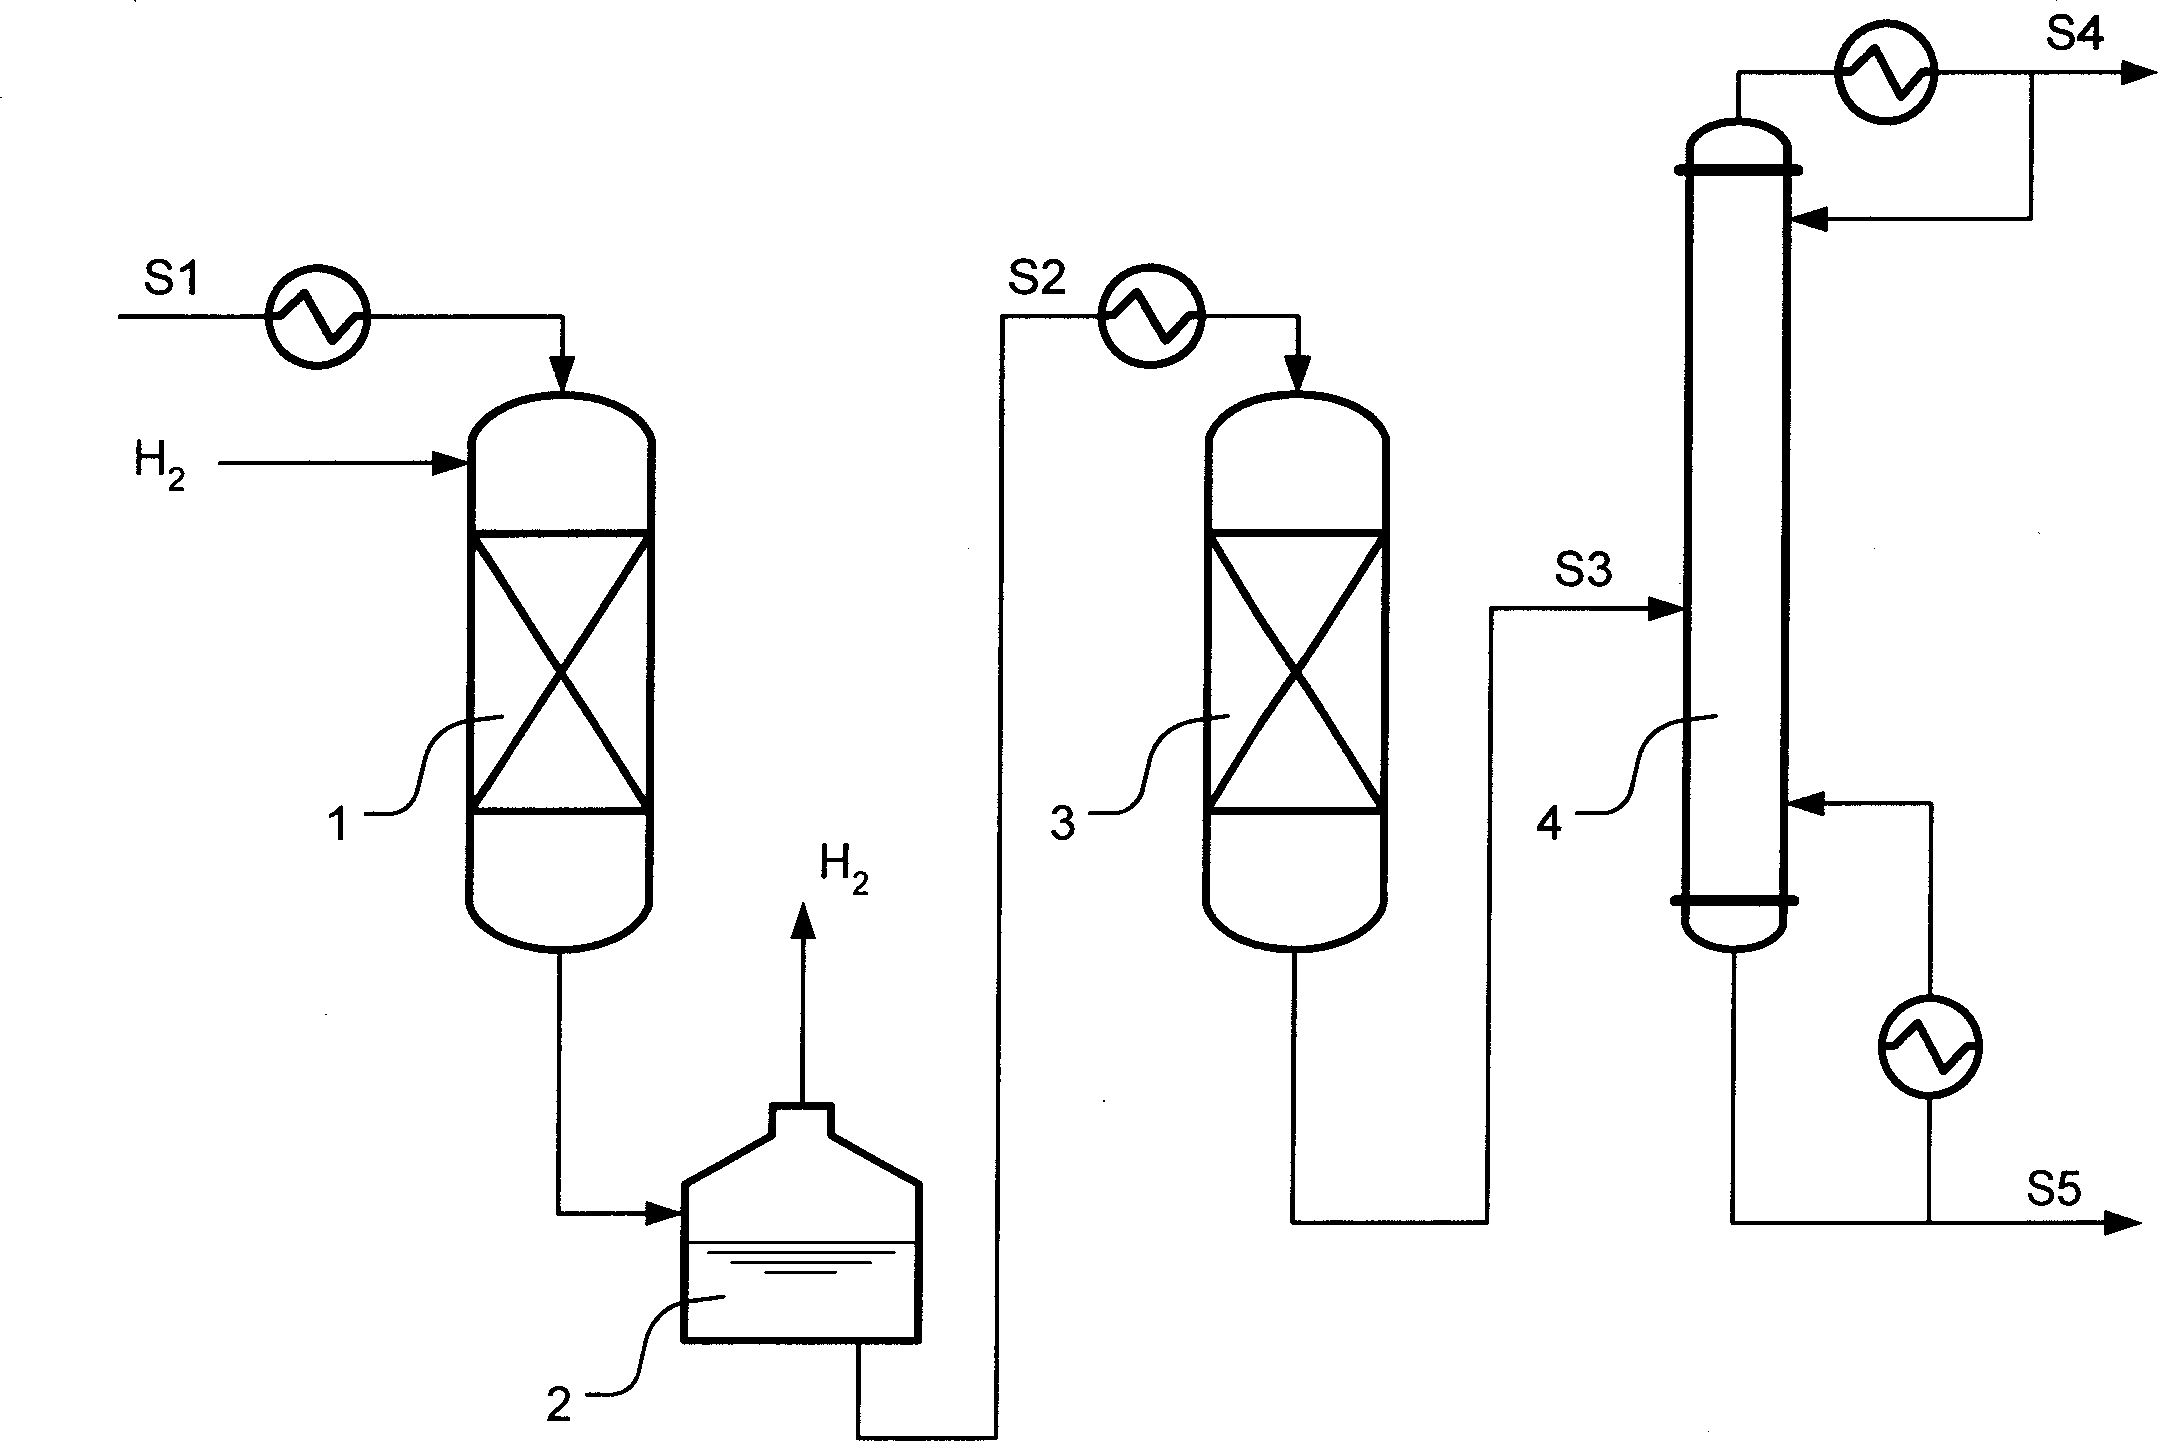 Process for preparing pentane from light C5 distillate